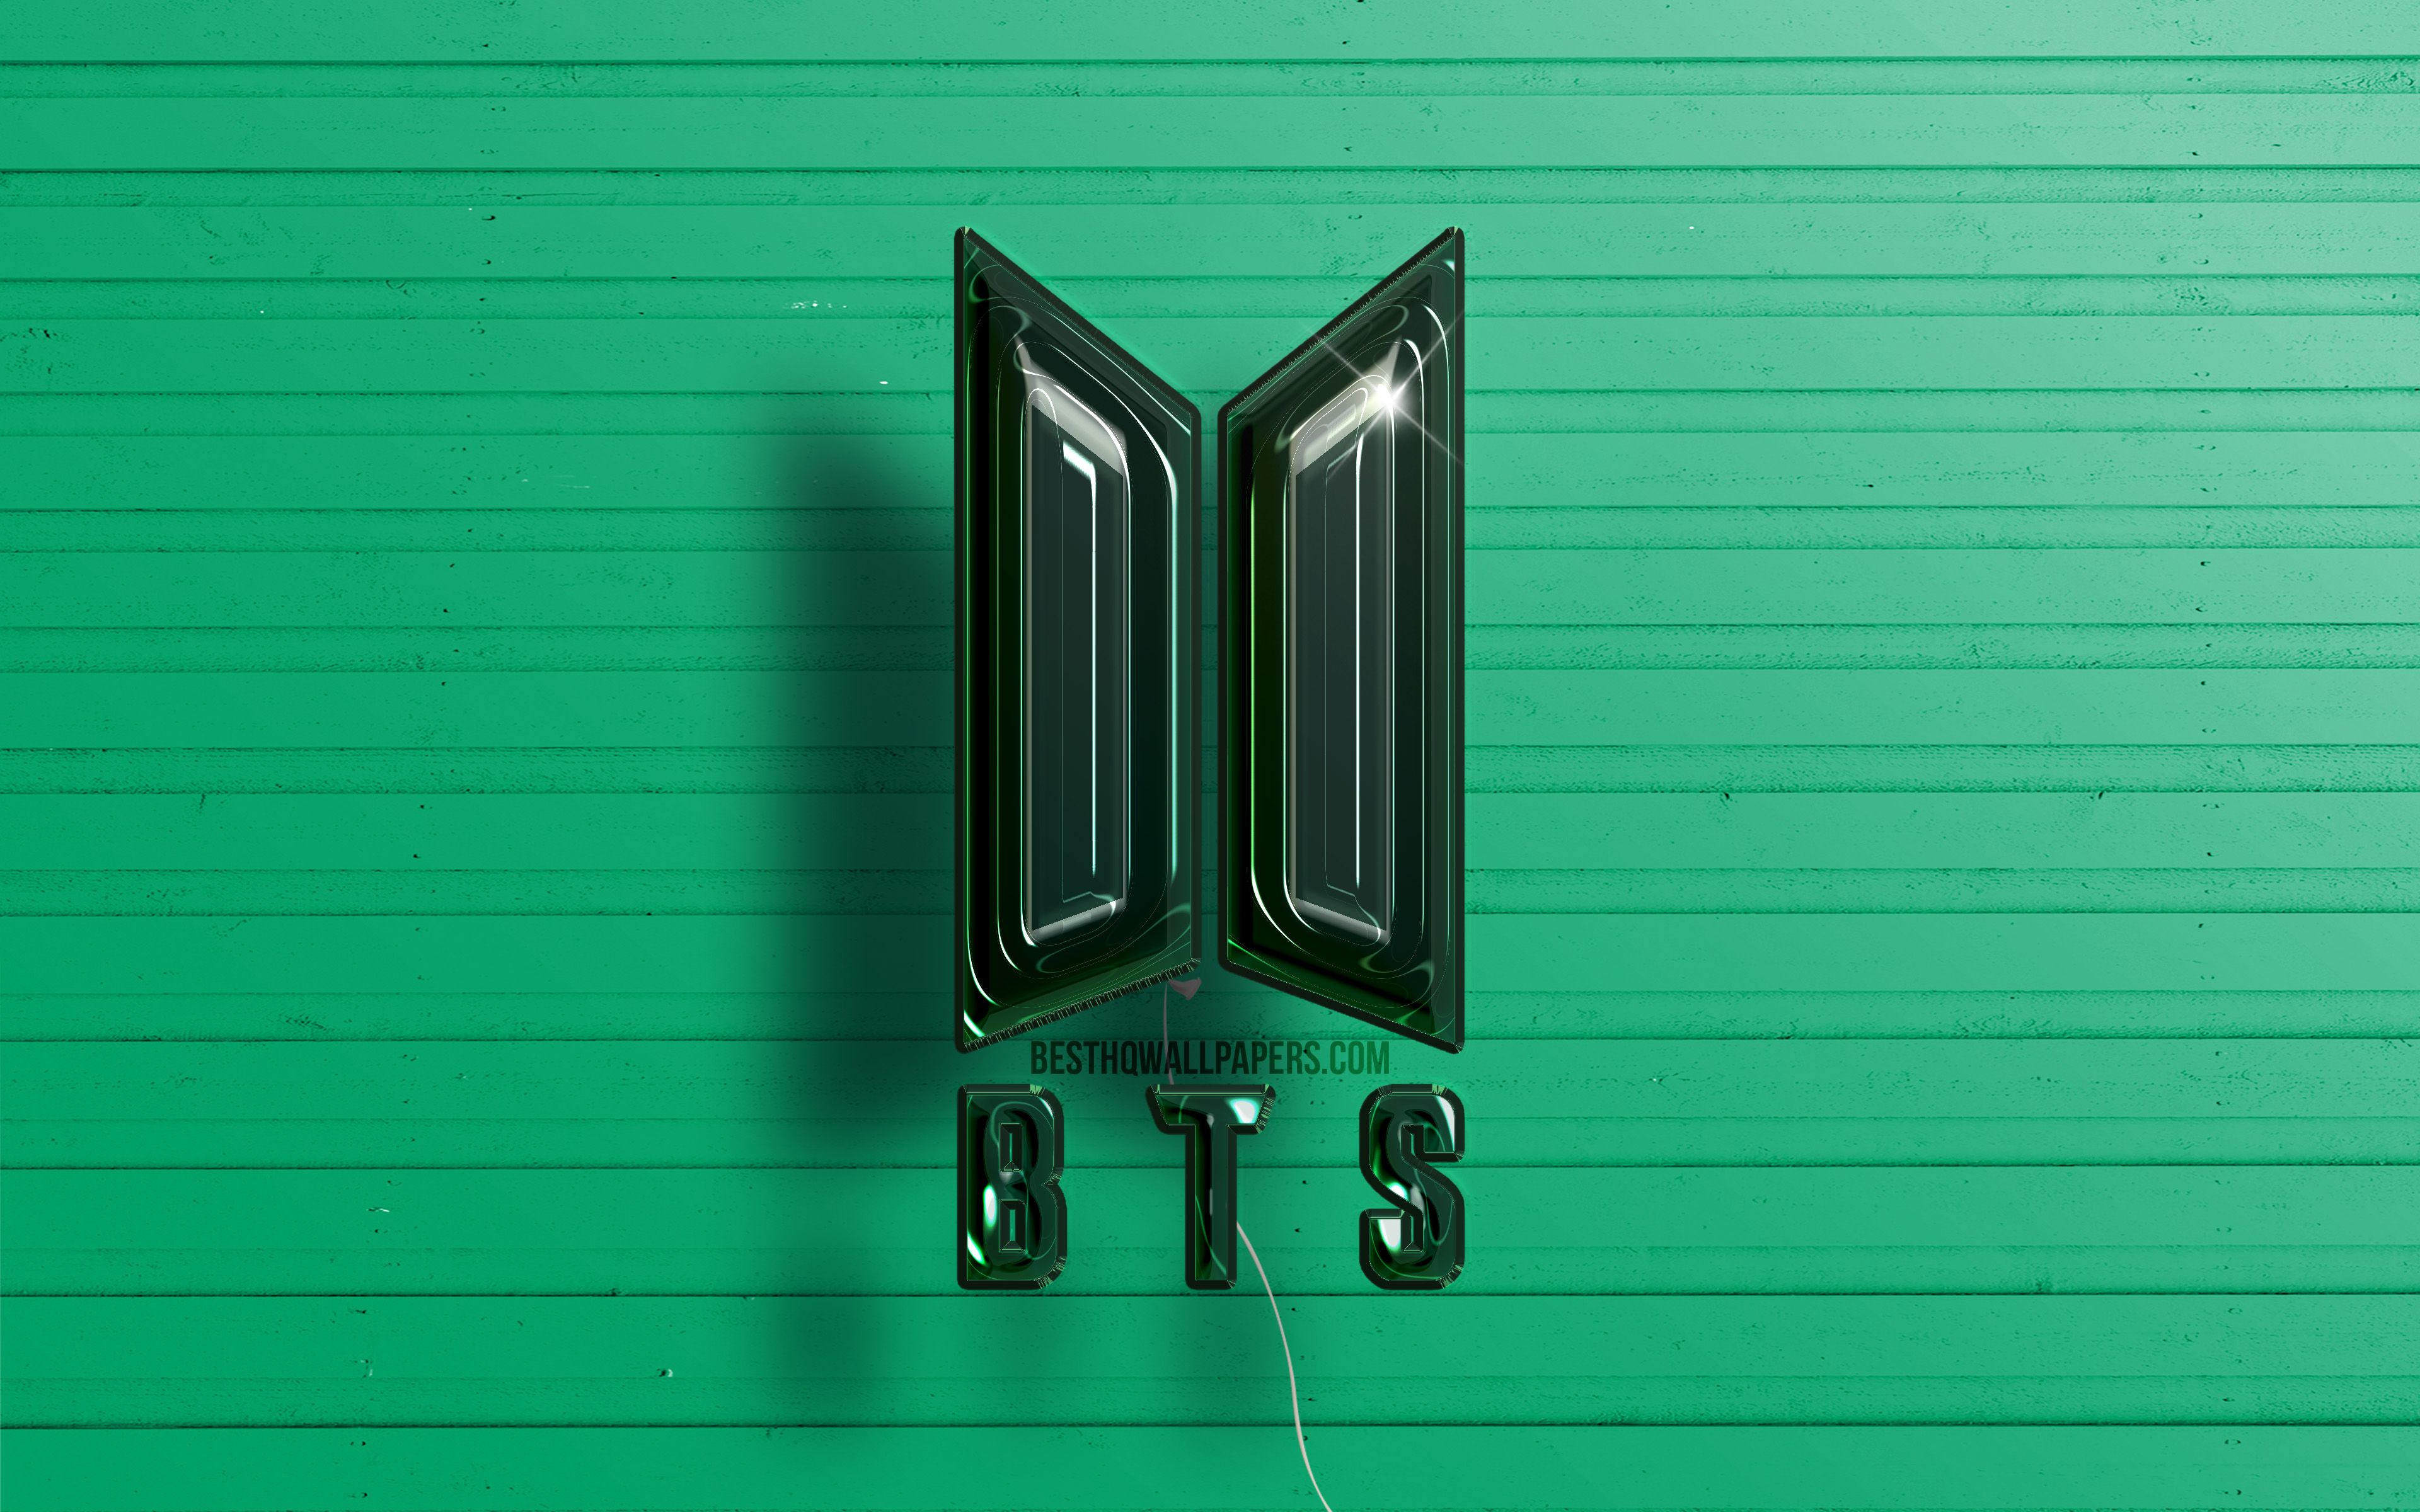 Download wallpaper BTS 3D logo, 4K, Bangtan Boys, dark green realistic balloons, BTS logo, Bangtan Boys logo, green wooden background, BTS for desktop with resolution 3840x2400. High Quality HD picture wallpaper